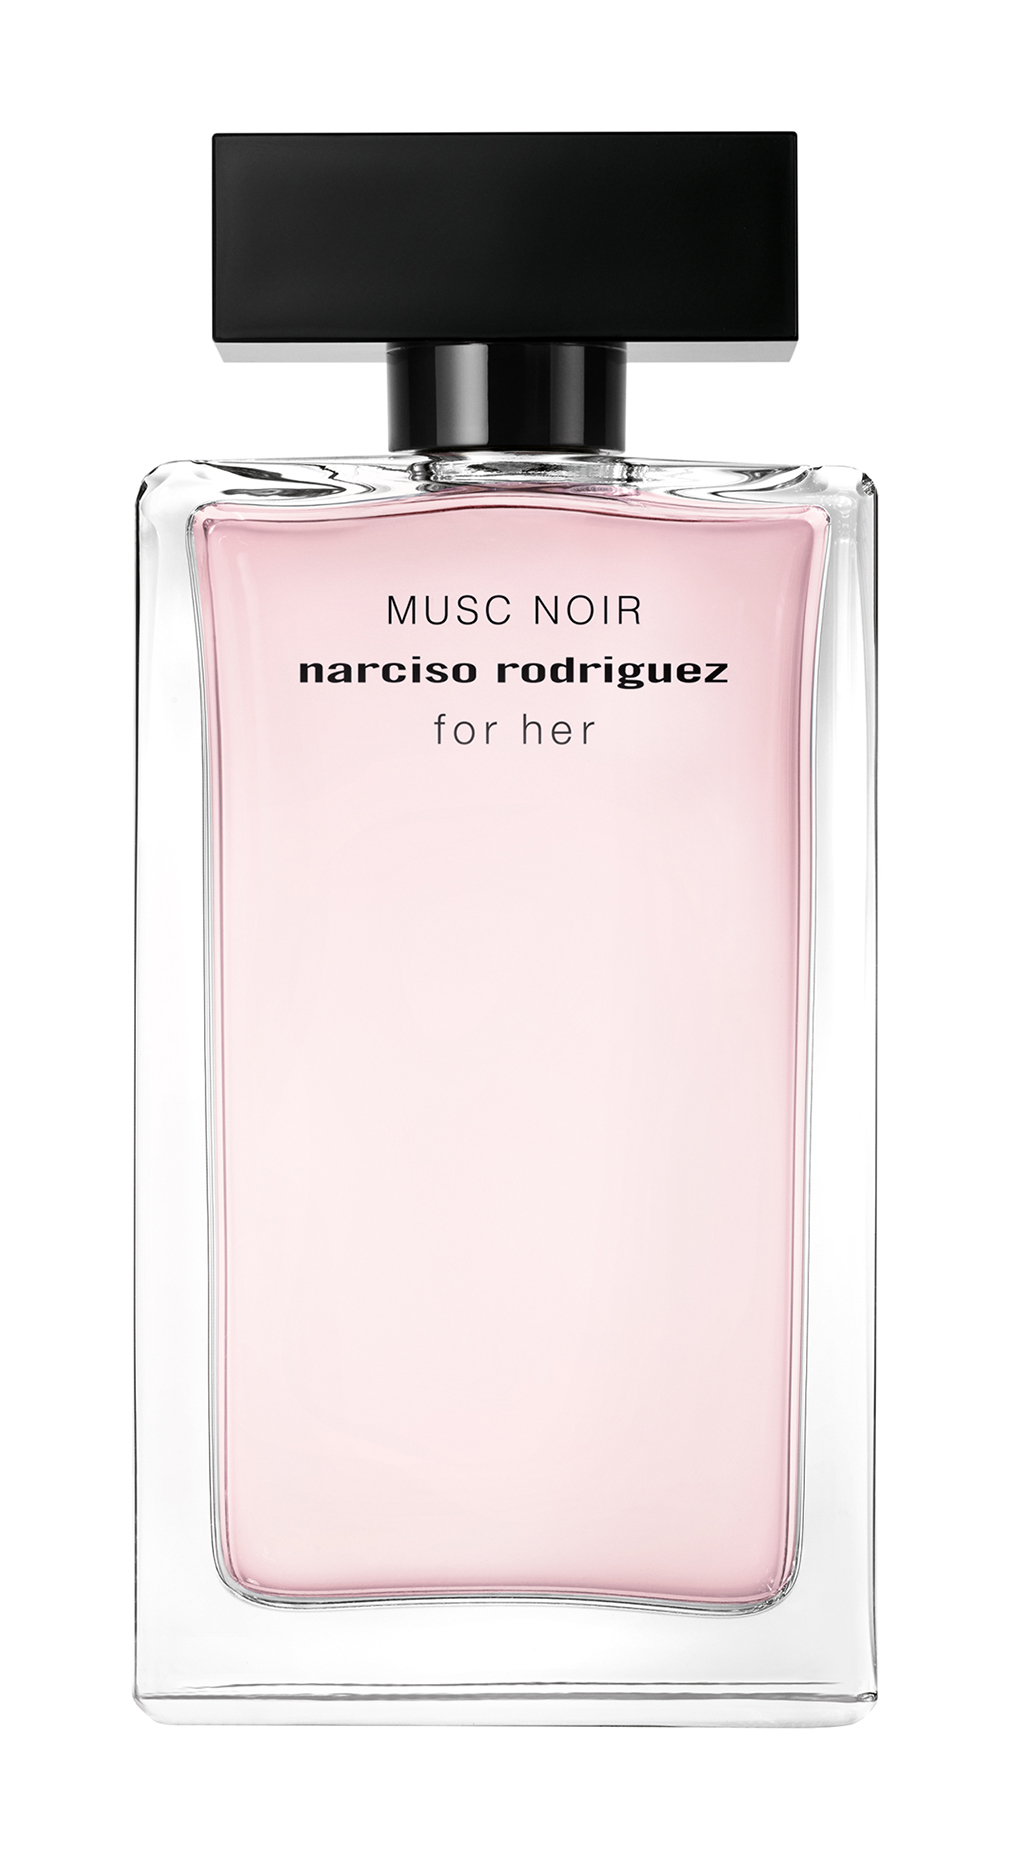 Narciso rodriguez musc купить. Narciso Rodriguez for her. Narciso Rodriguez Musc for her. Narciso Rodriguez for her Eau de Parfum парфюмерная вода 100 мл. Narciso Rodriguez Narciso.